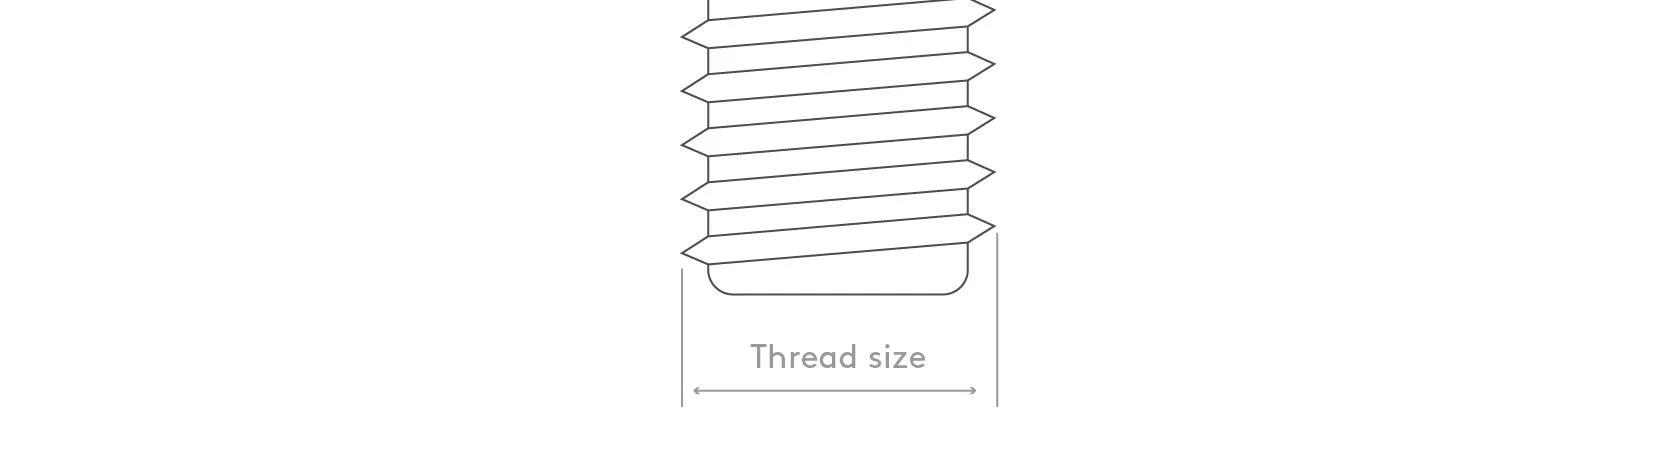 thread size